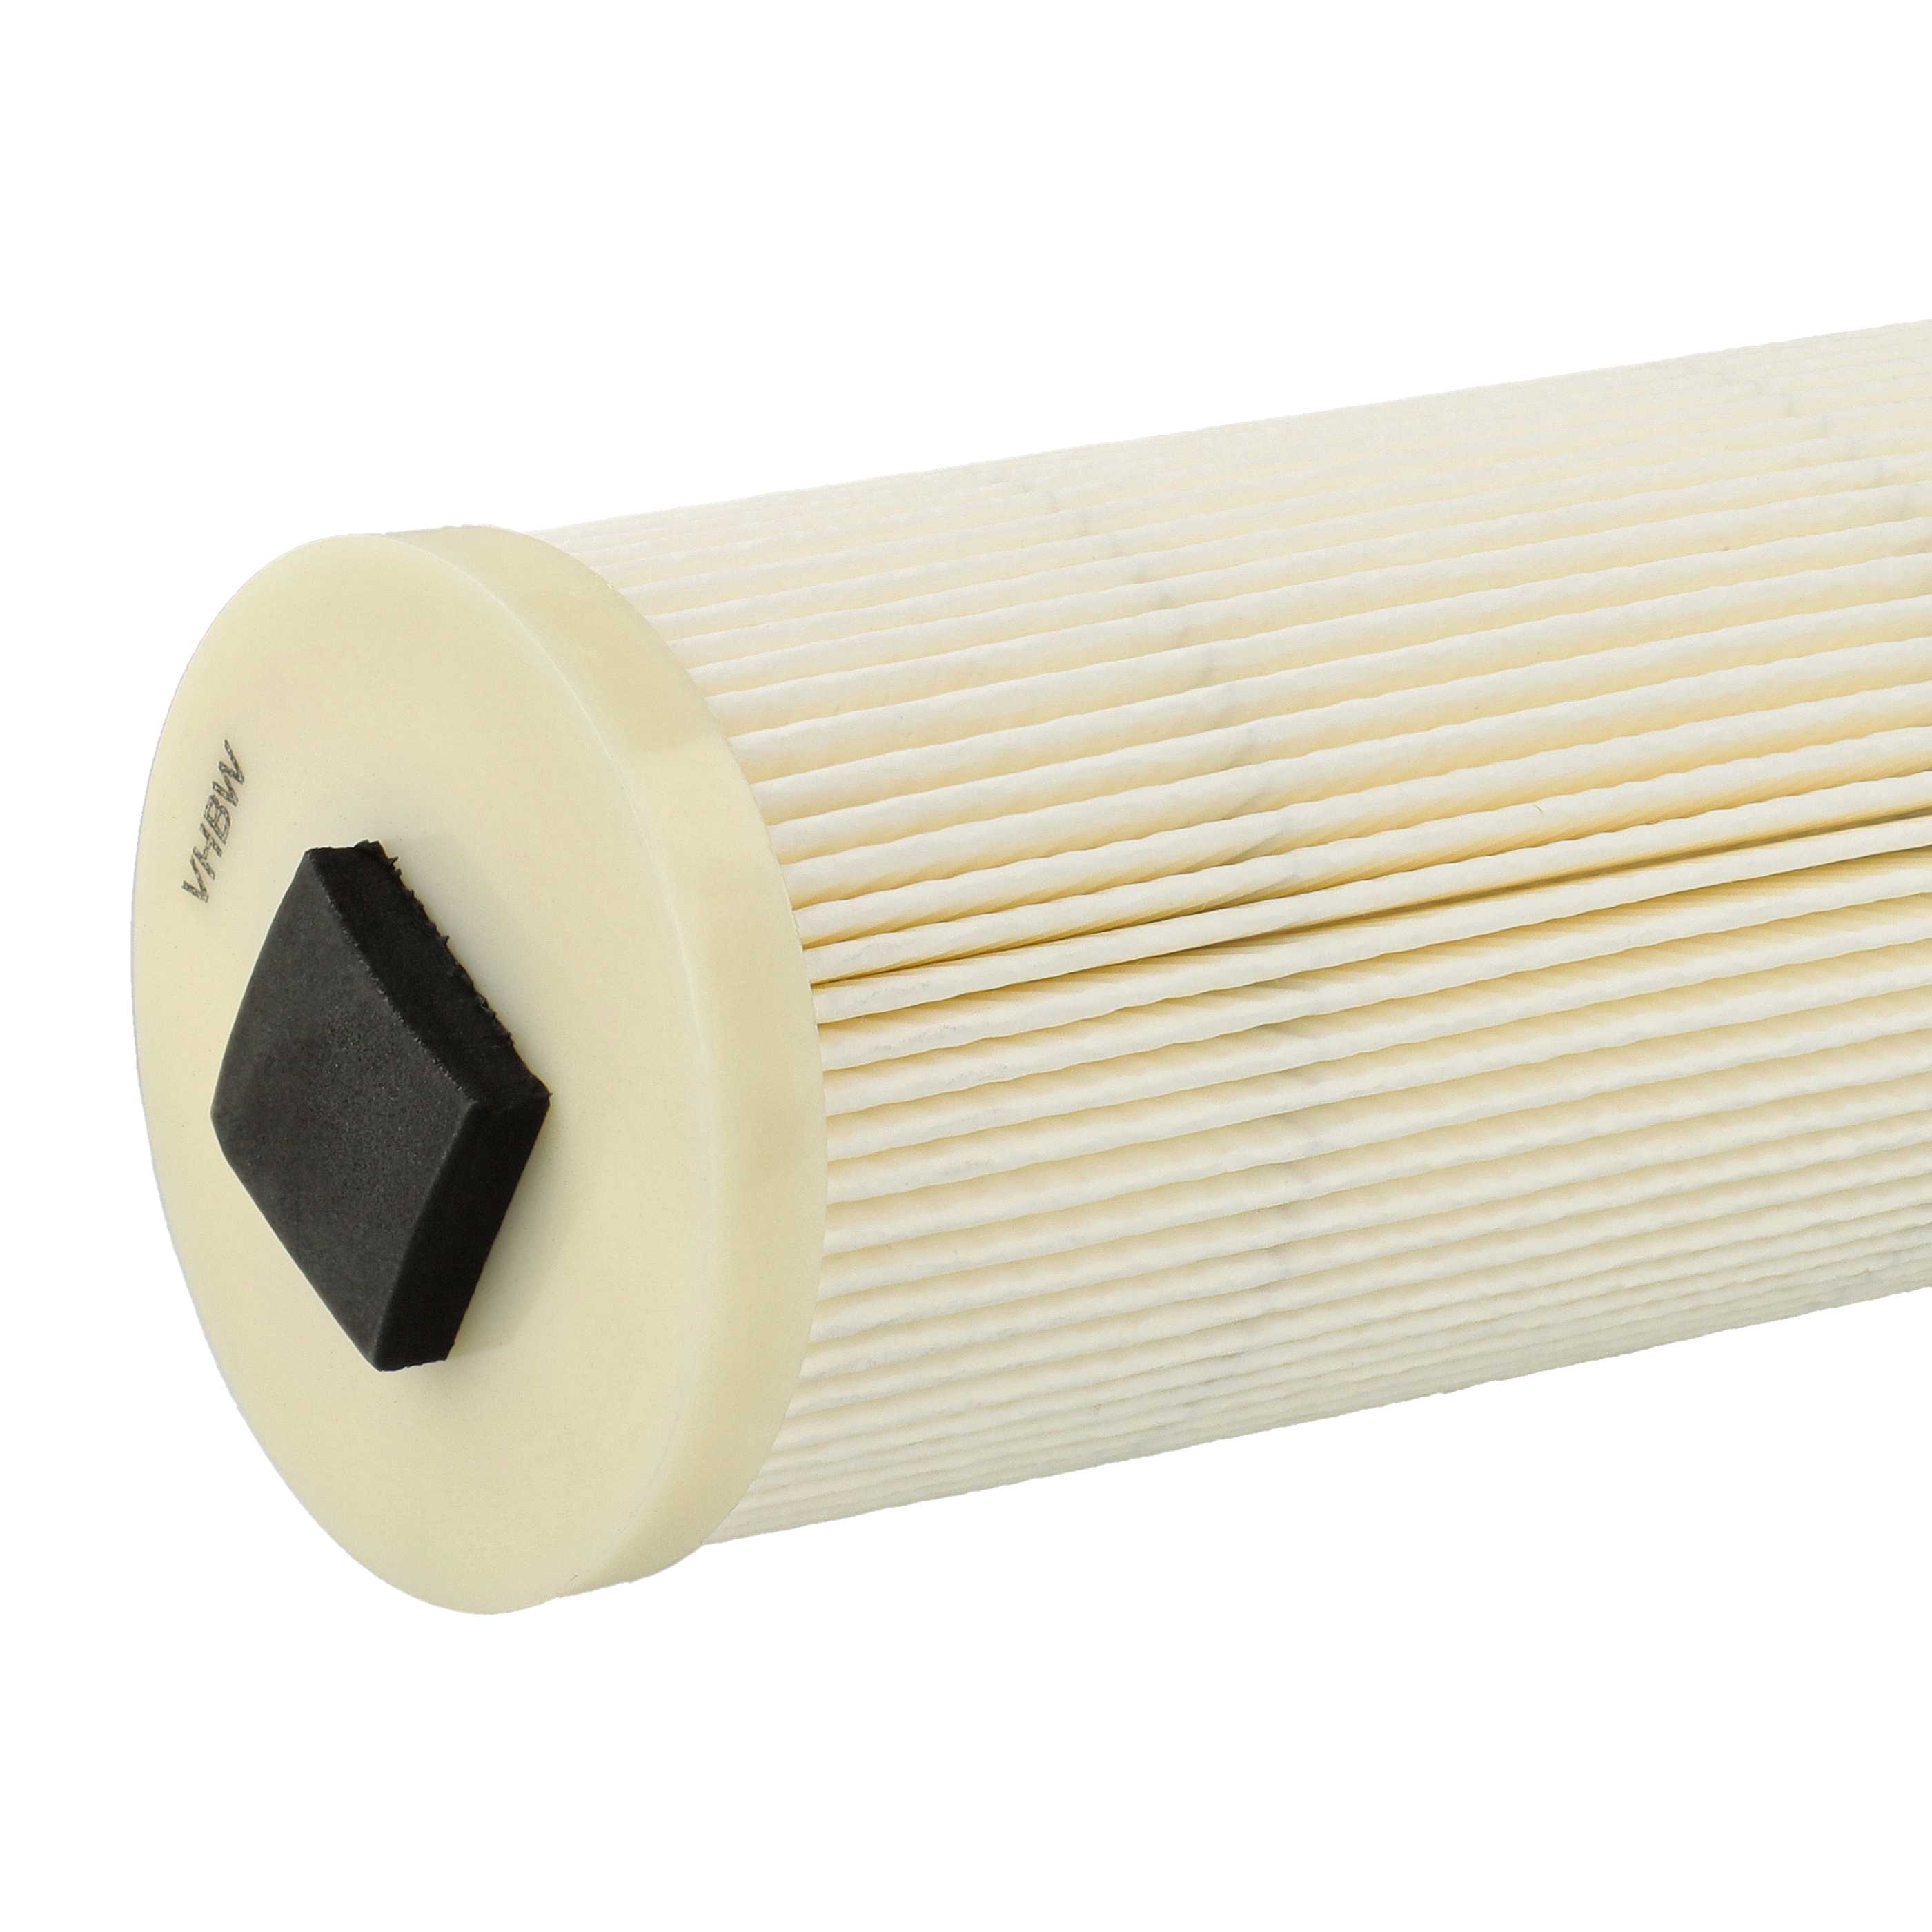 Filtro reemplaza Dustcontrol 42027 para aspiradora - filtro Hepa naranja / blanco